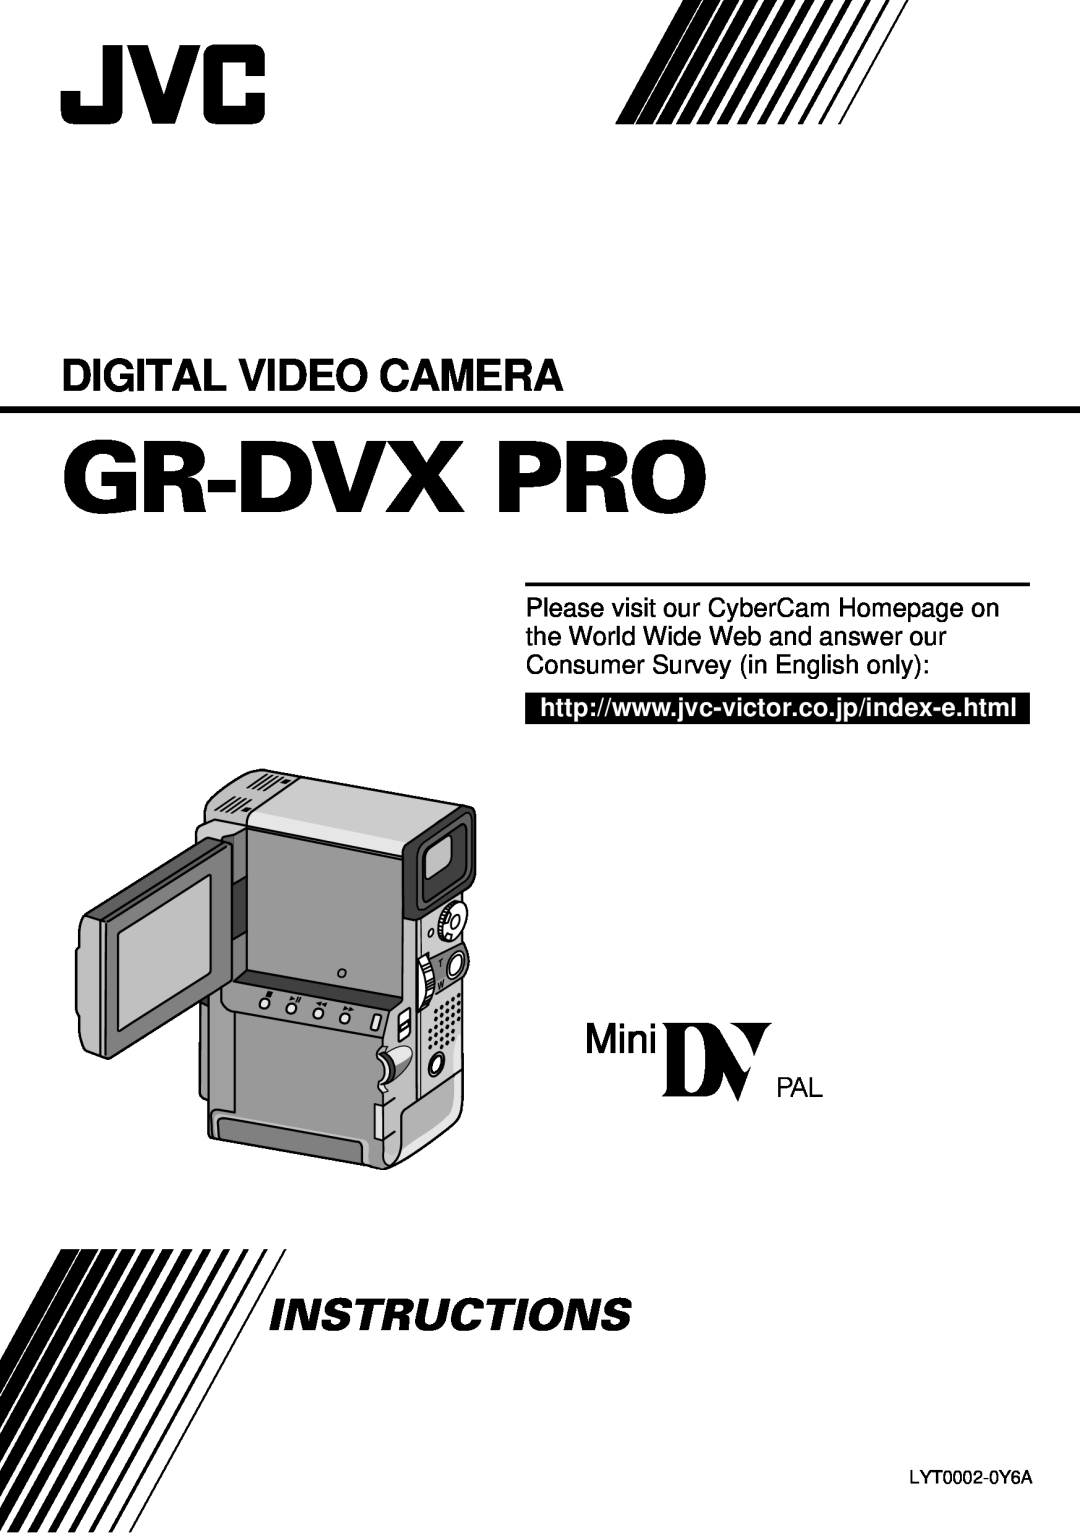 JVC LYT0002-0Y6A manual Gr-Dvx Pro, Digital Video Camera, Instructions 